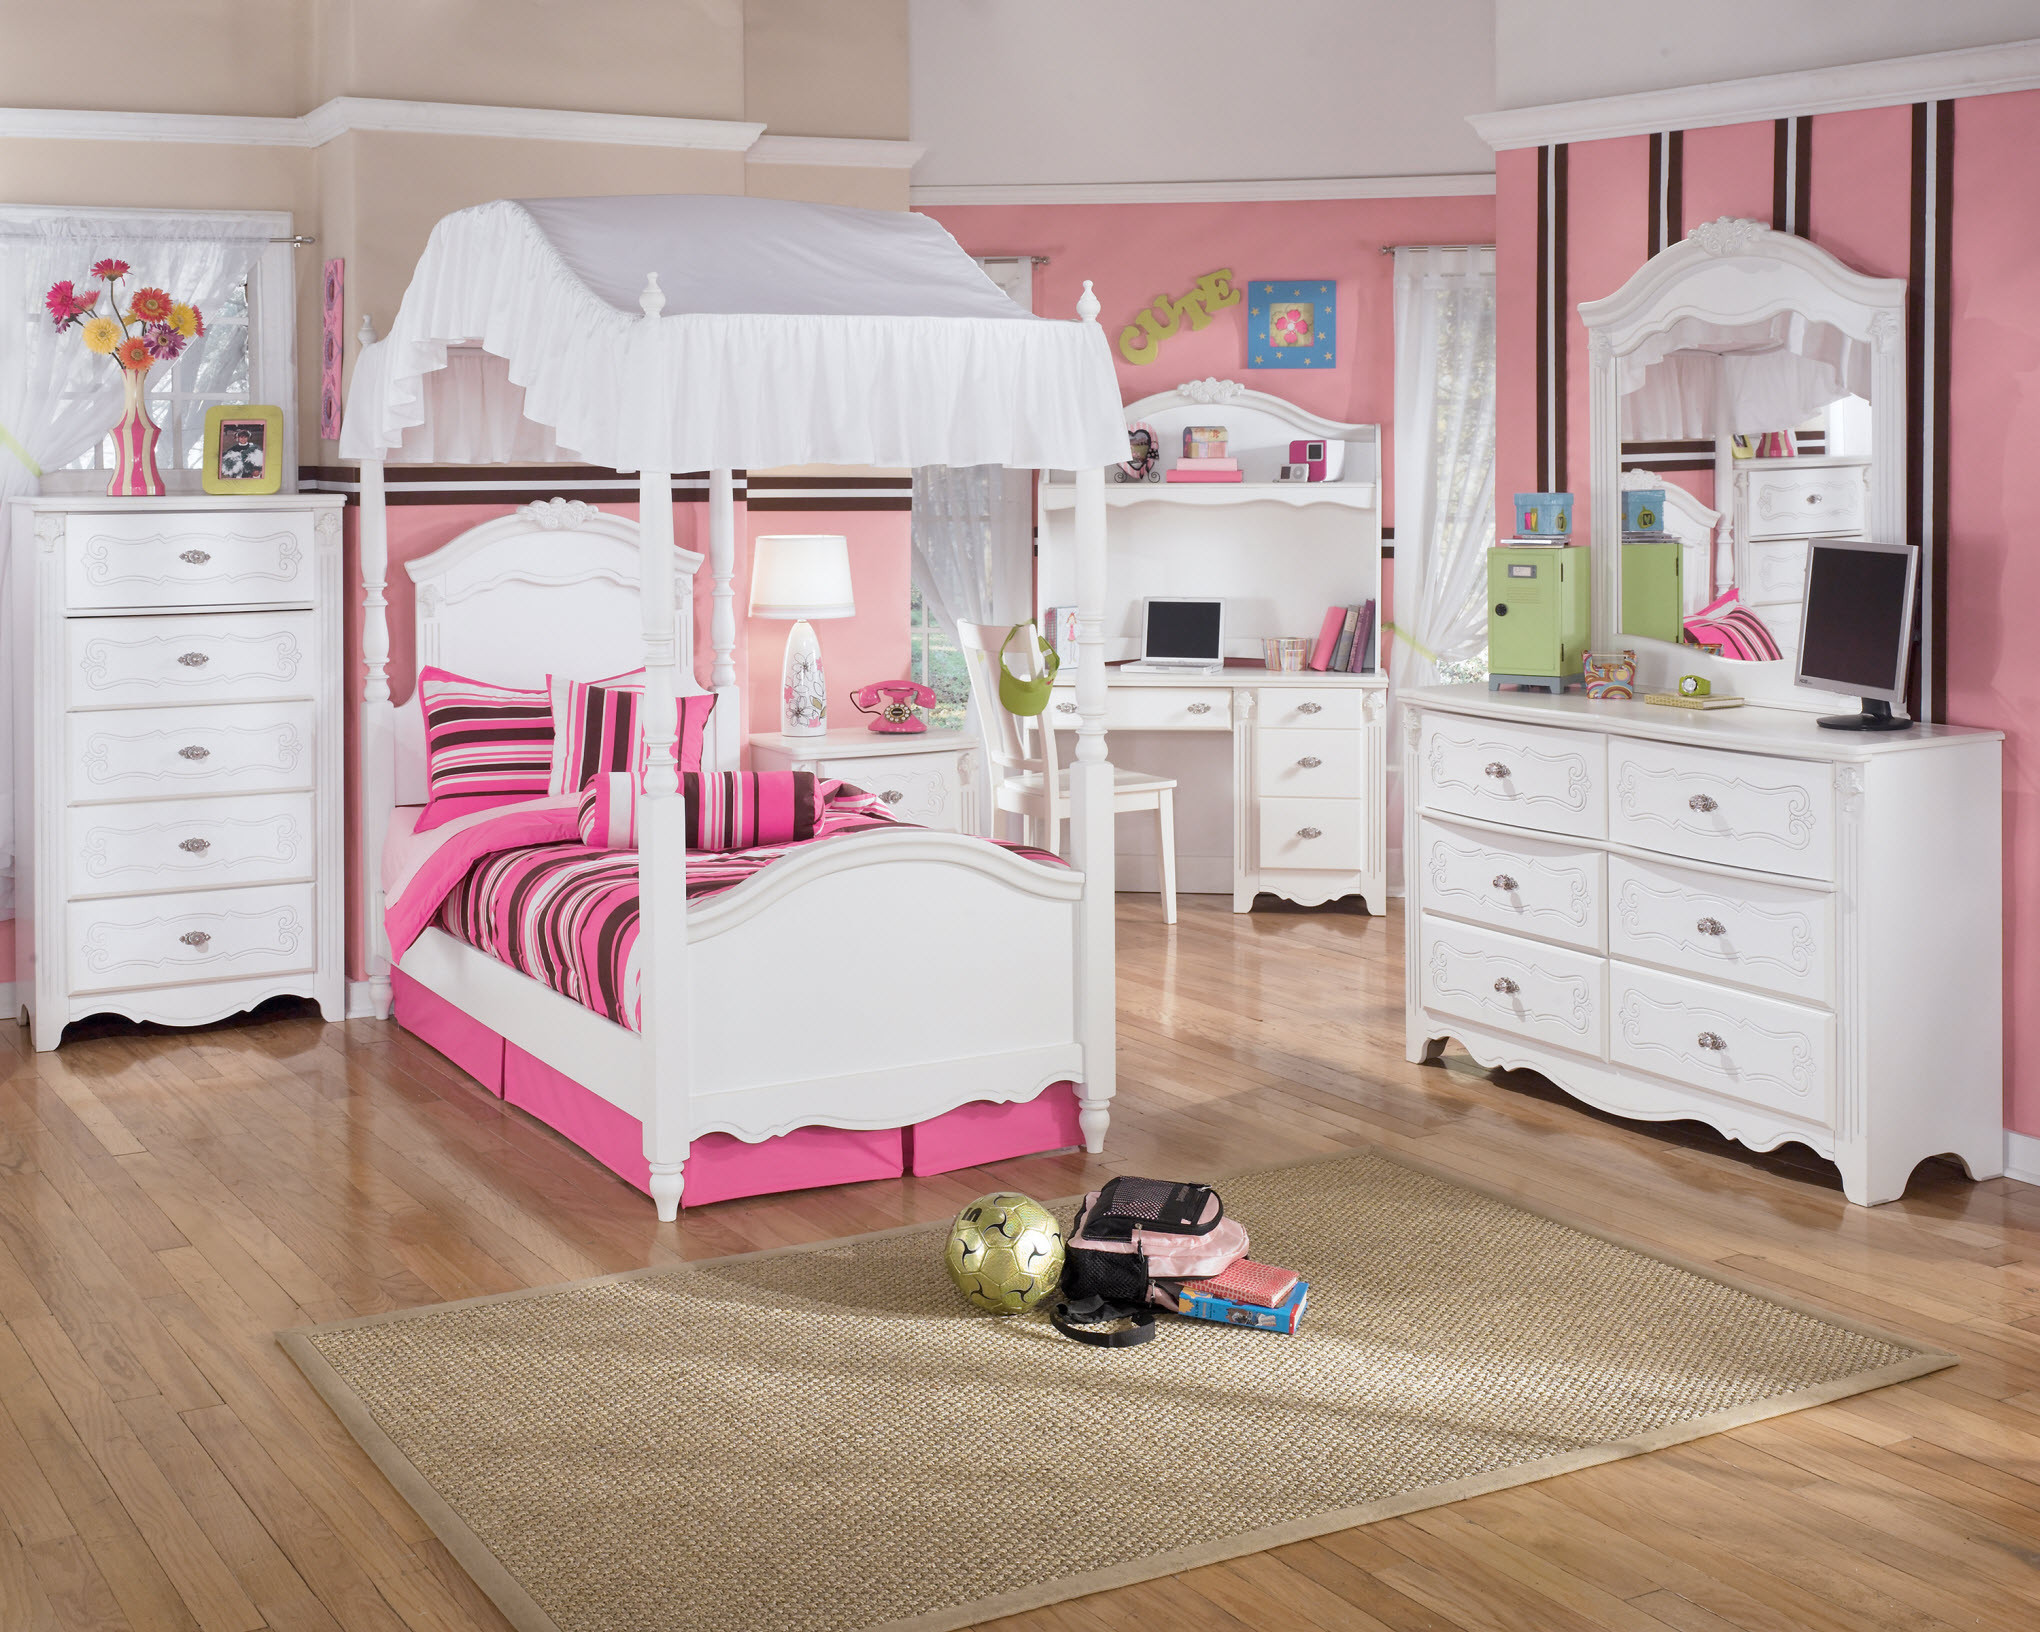 Kids Room Dresser
 25 Romantic and Modern Ideas for Girls Bedroom Sets